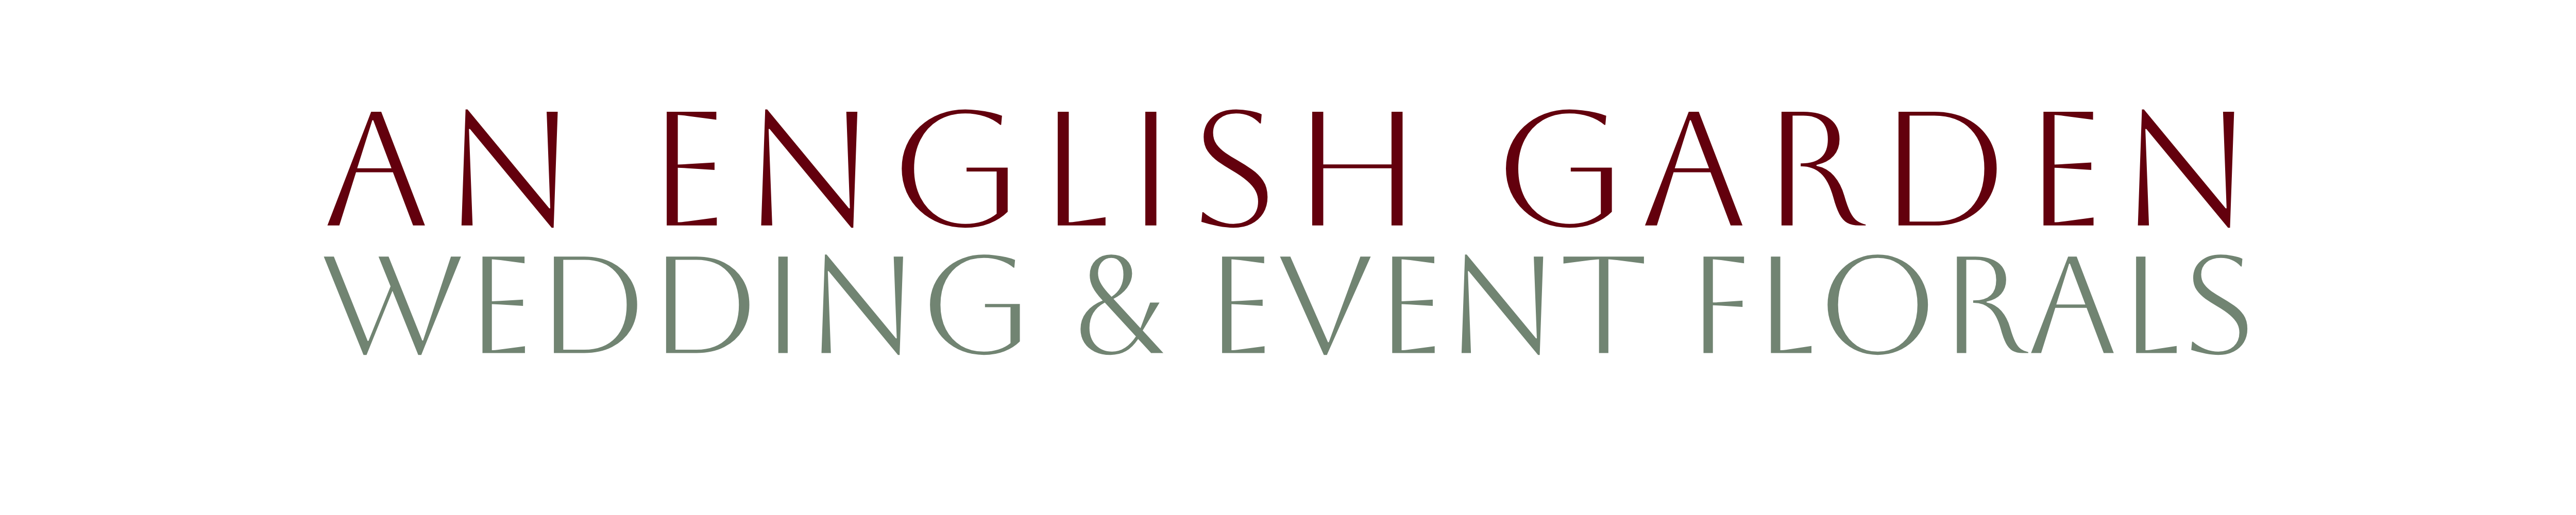 An English Garden Wedding & Event Florals logo